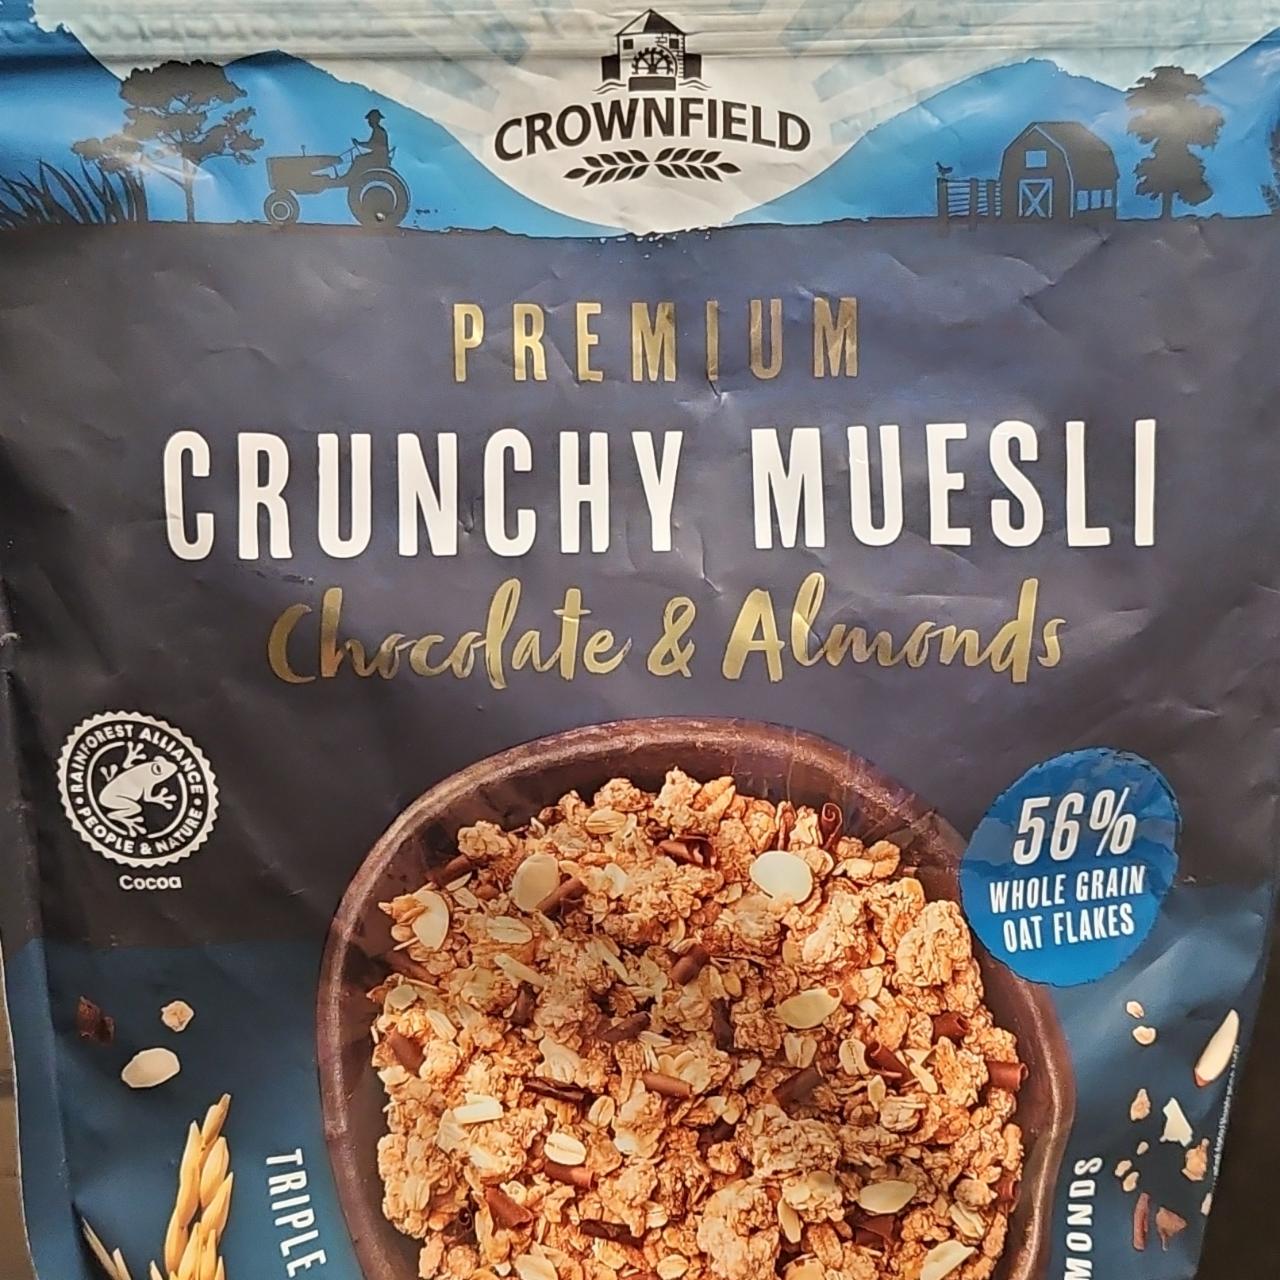 Fotografie - Premium Crunchy Muesli Chocholate & Almonds Crownfield